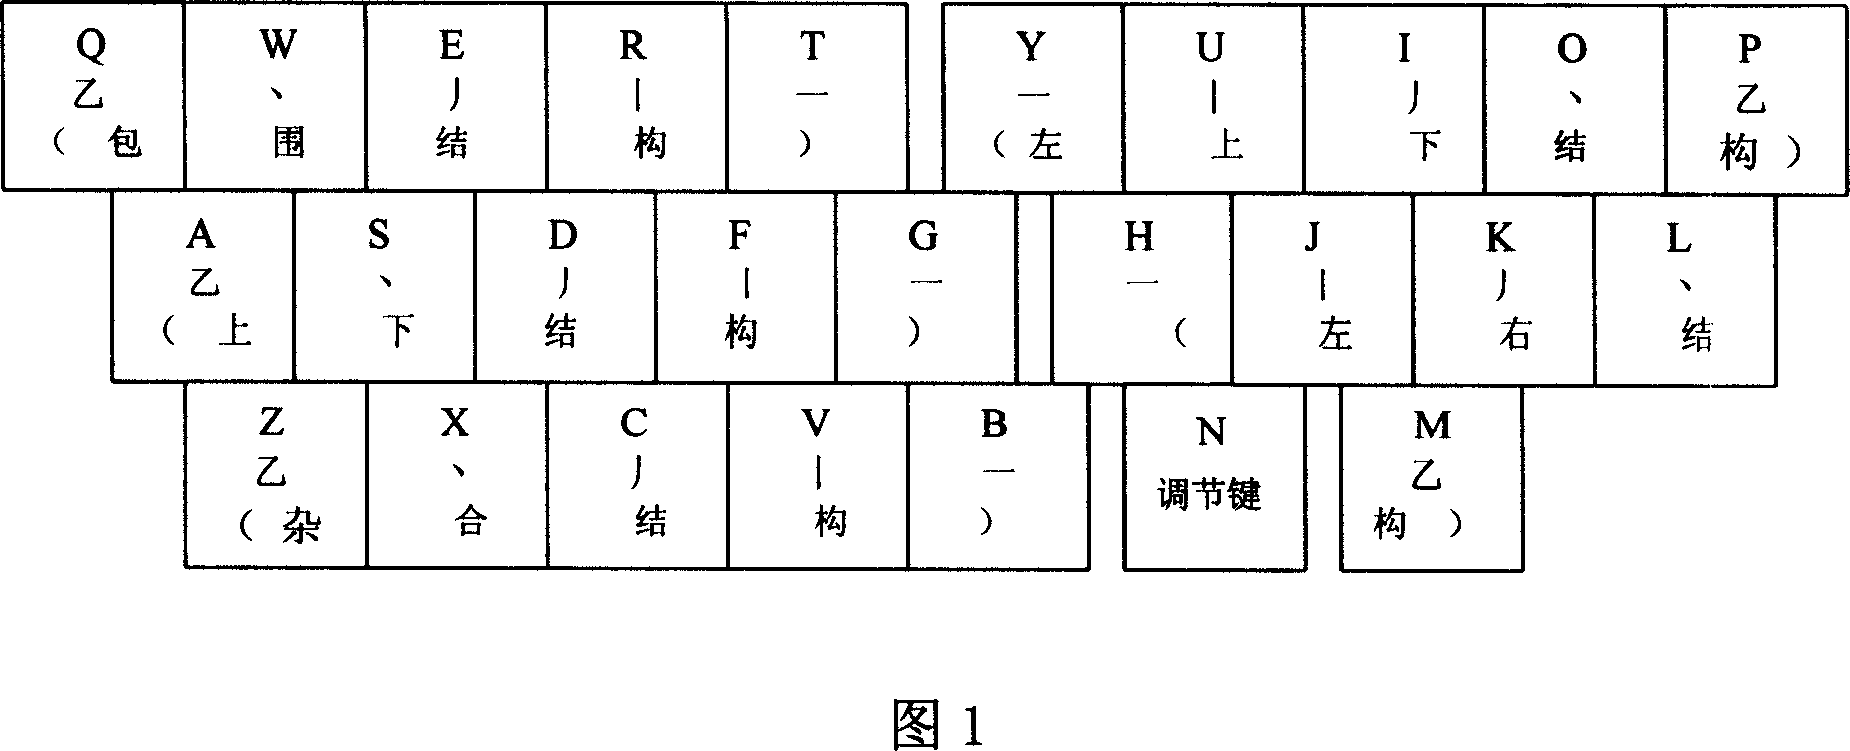 5-tone input method and its keyboard